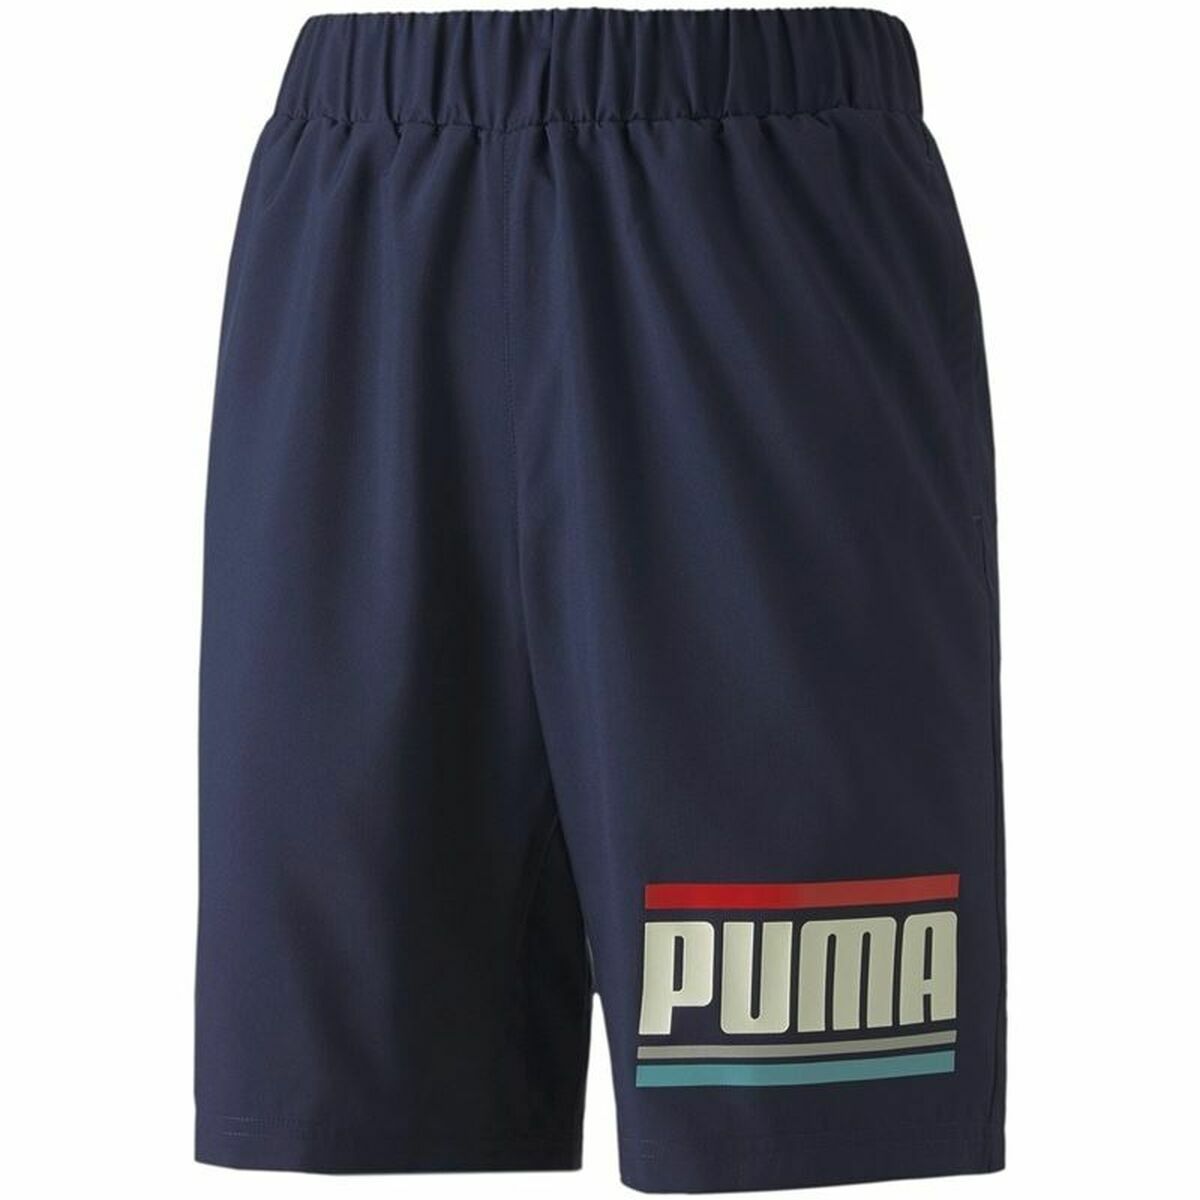 Sport Shorts for Kids Puma Celebration Boys Woven Dark blue